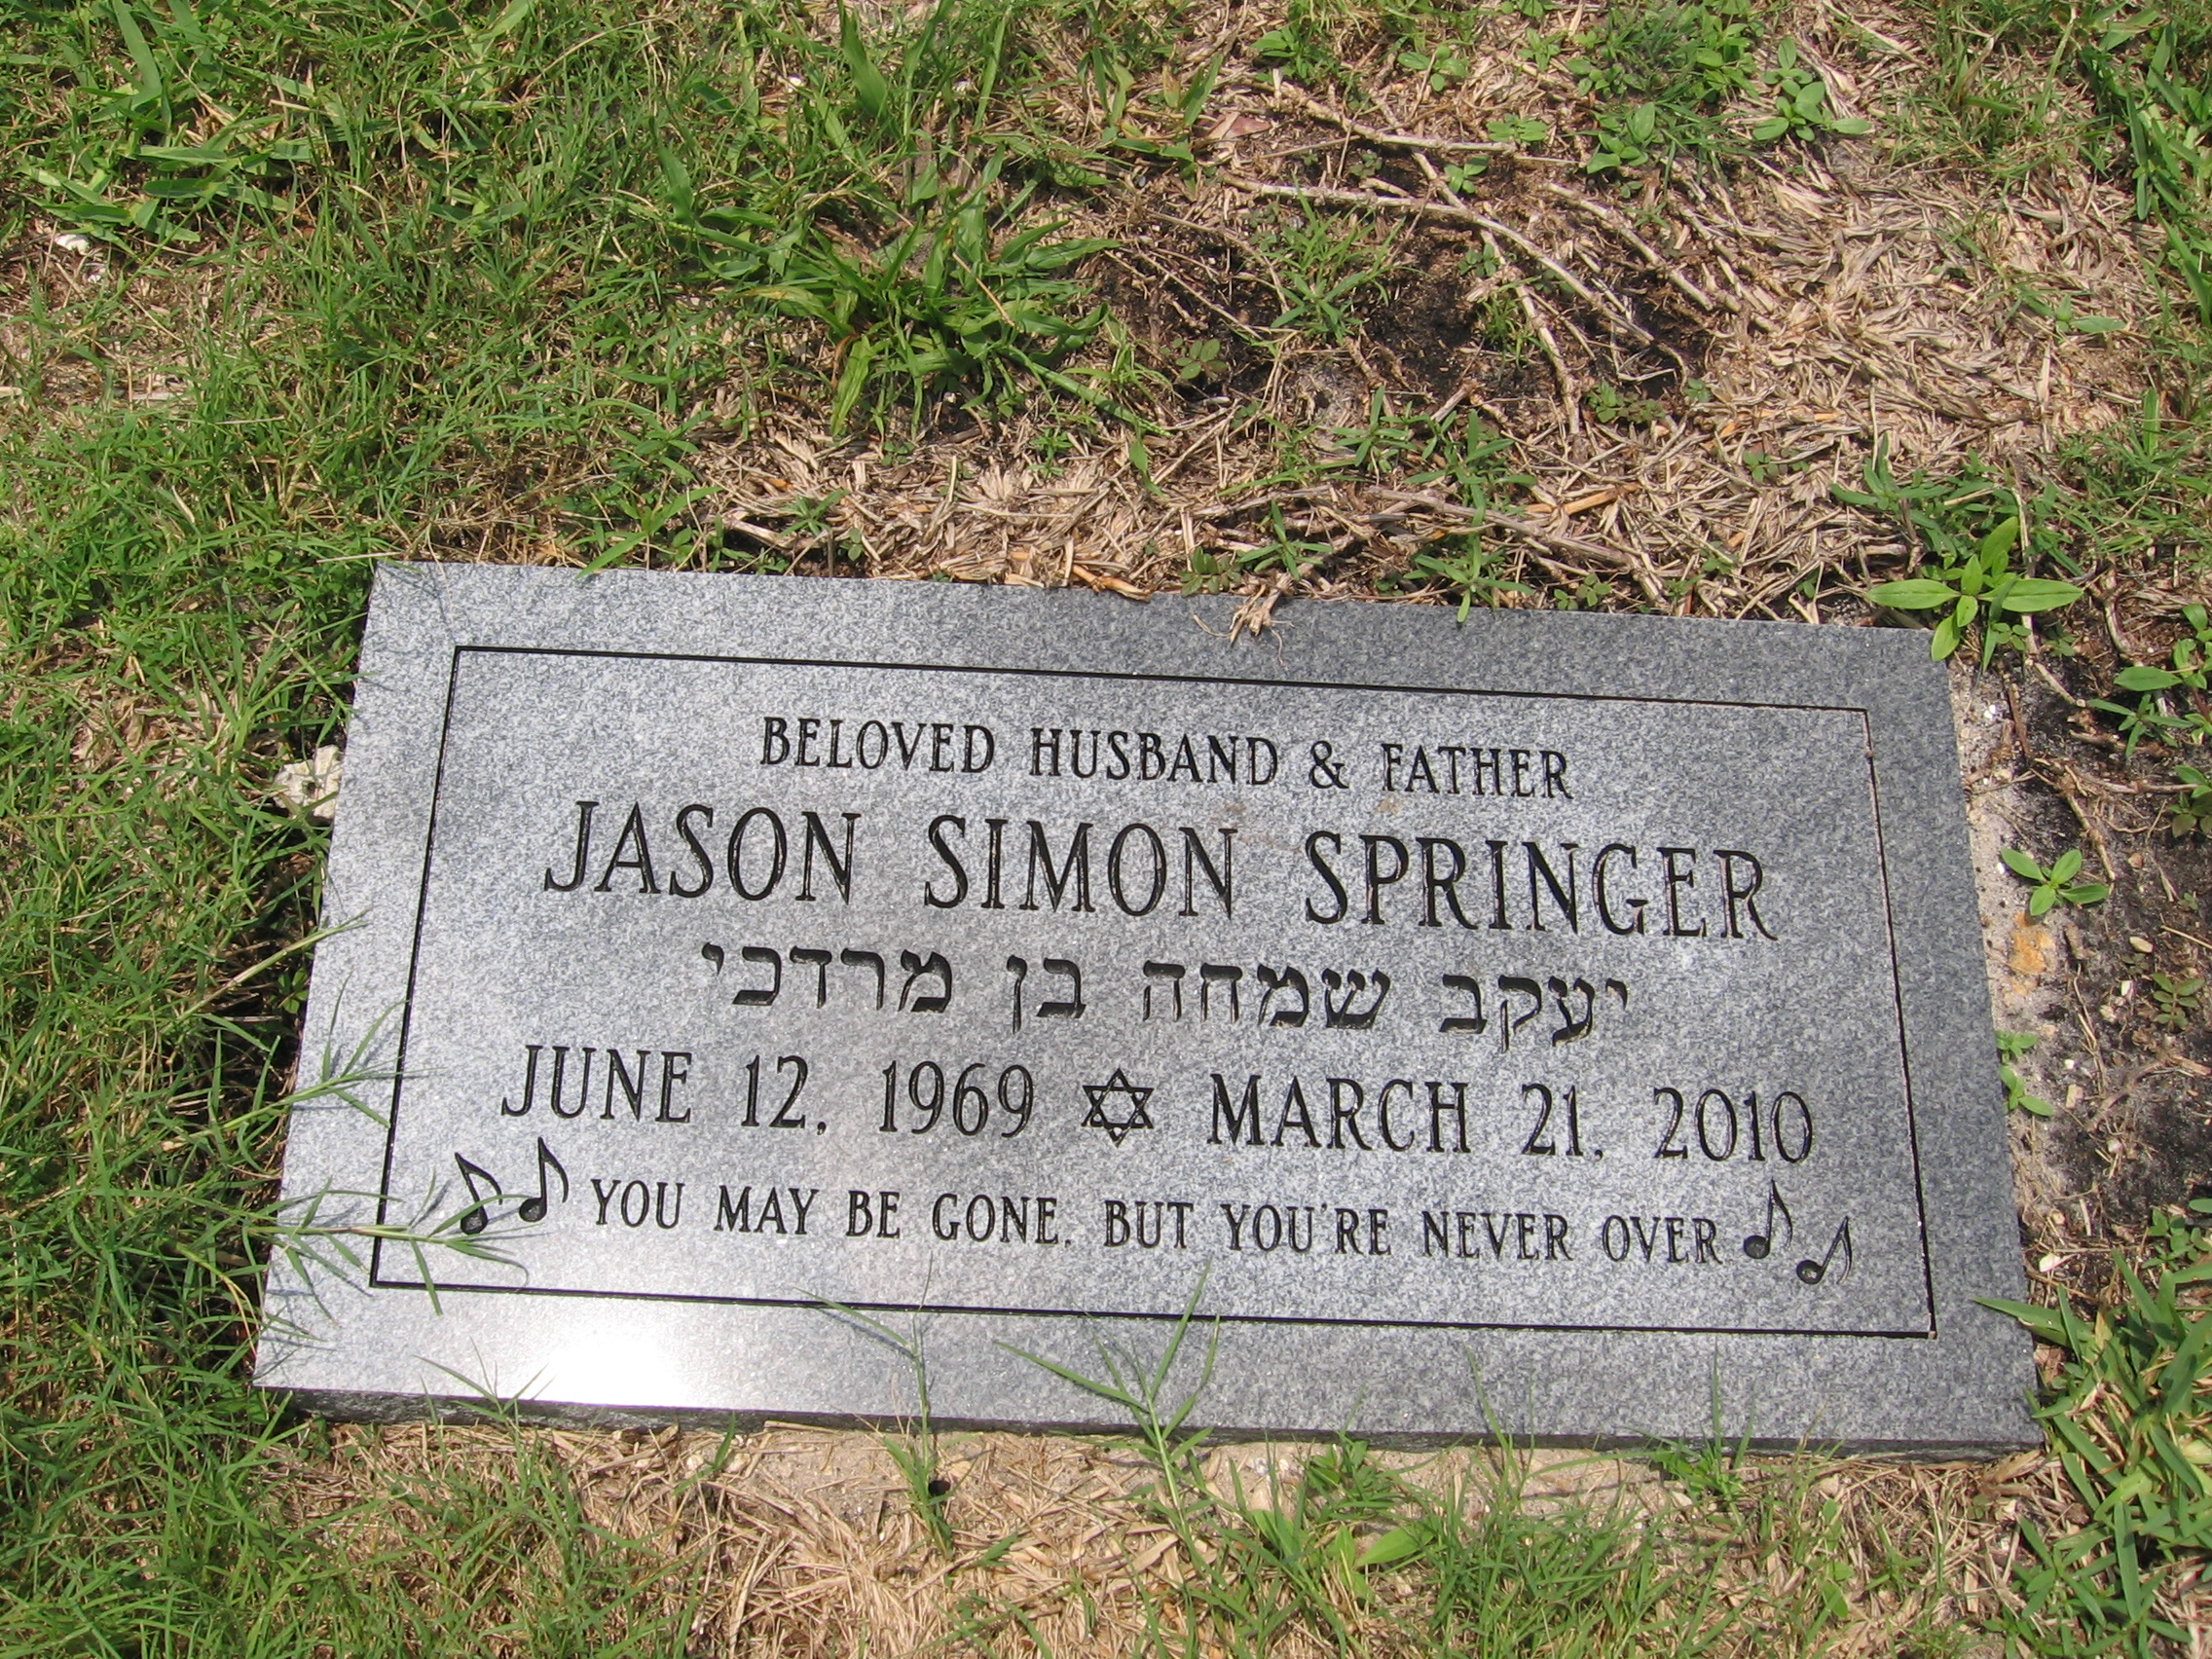 Jason Simon Springer